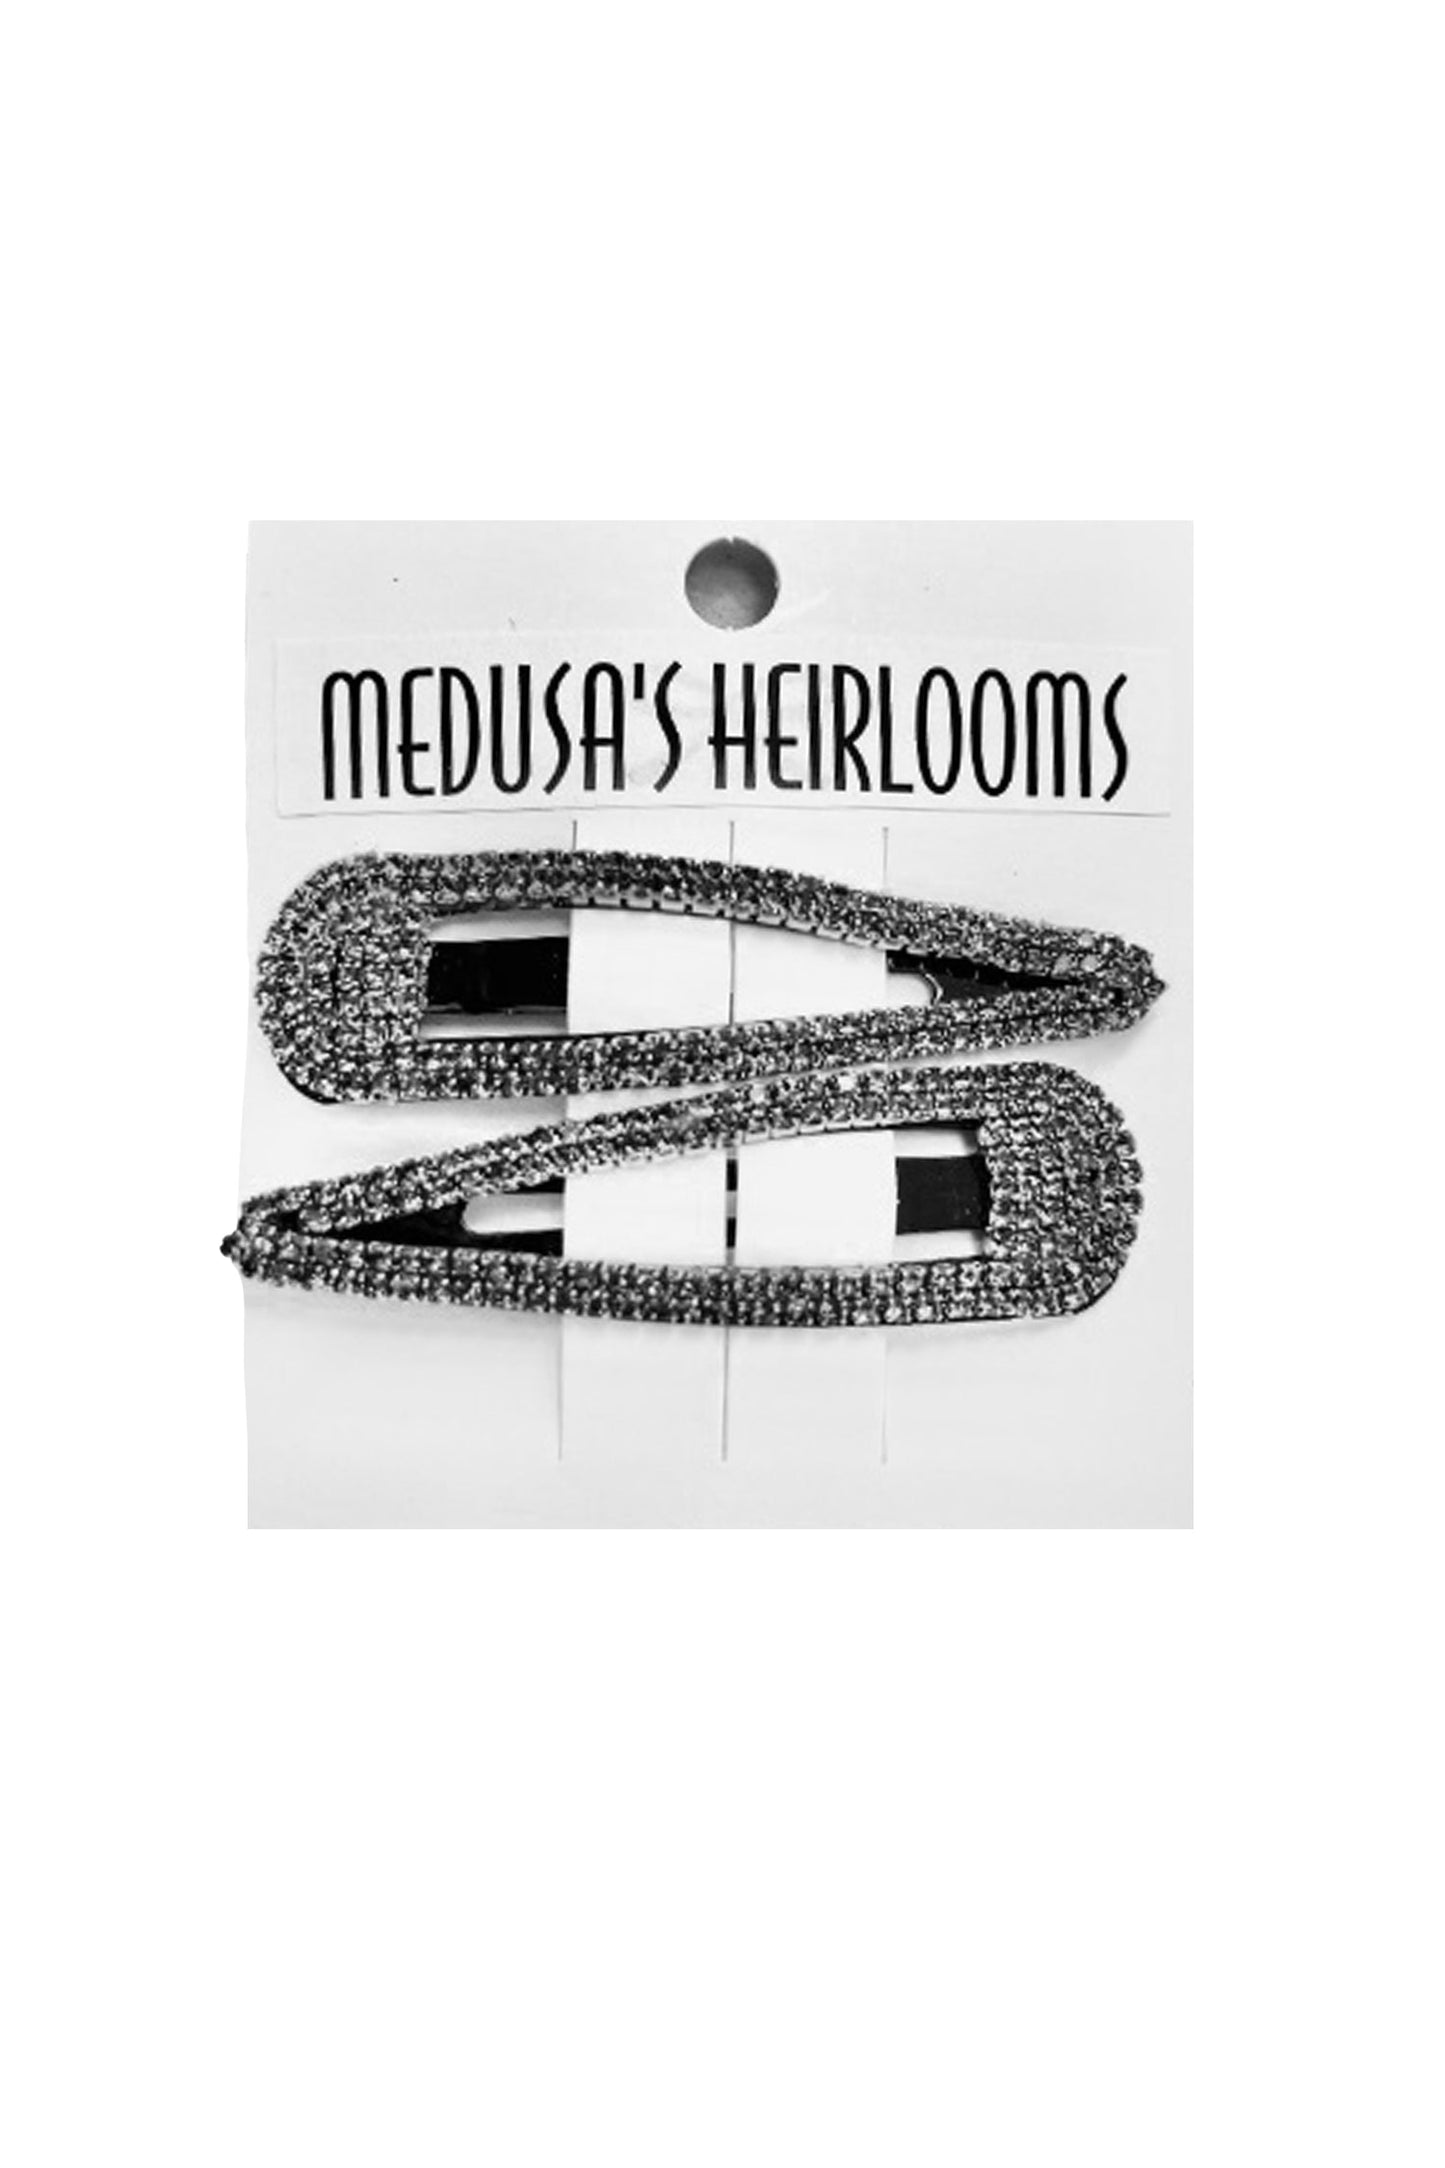 Snap Clip, 2-hollow arrowheads shape, black diamond rhinestones edges, Medusa’s Heirlooms display